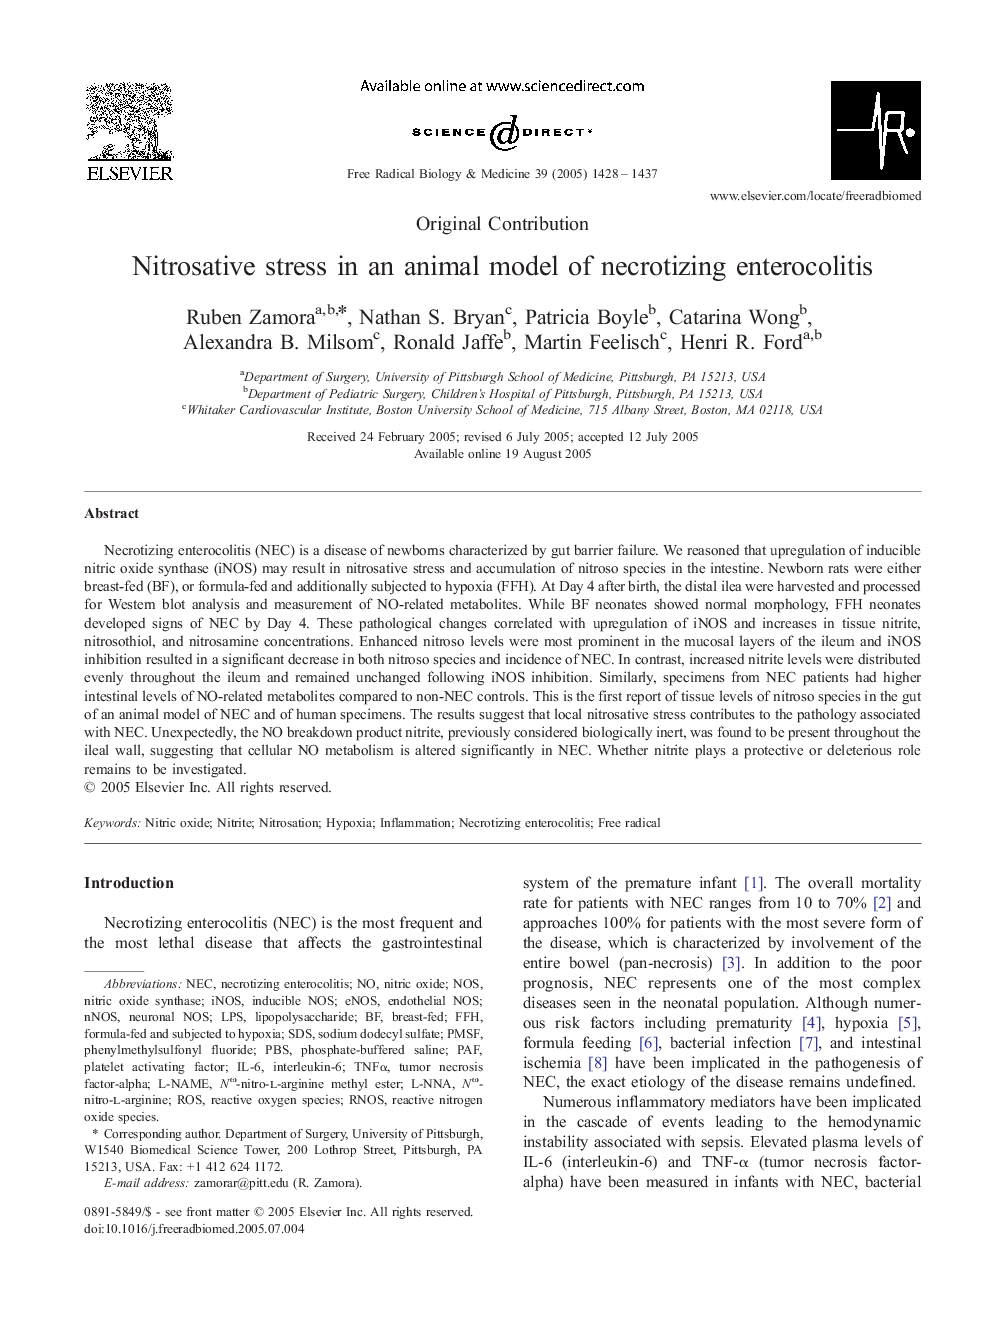 Nitrosative stress in an animal model of necrotizing enterocolitis